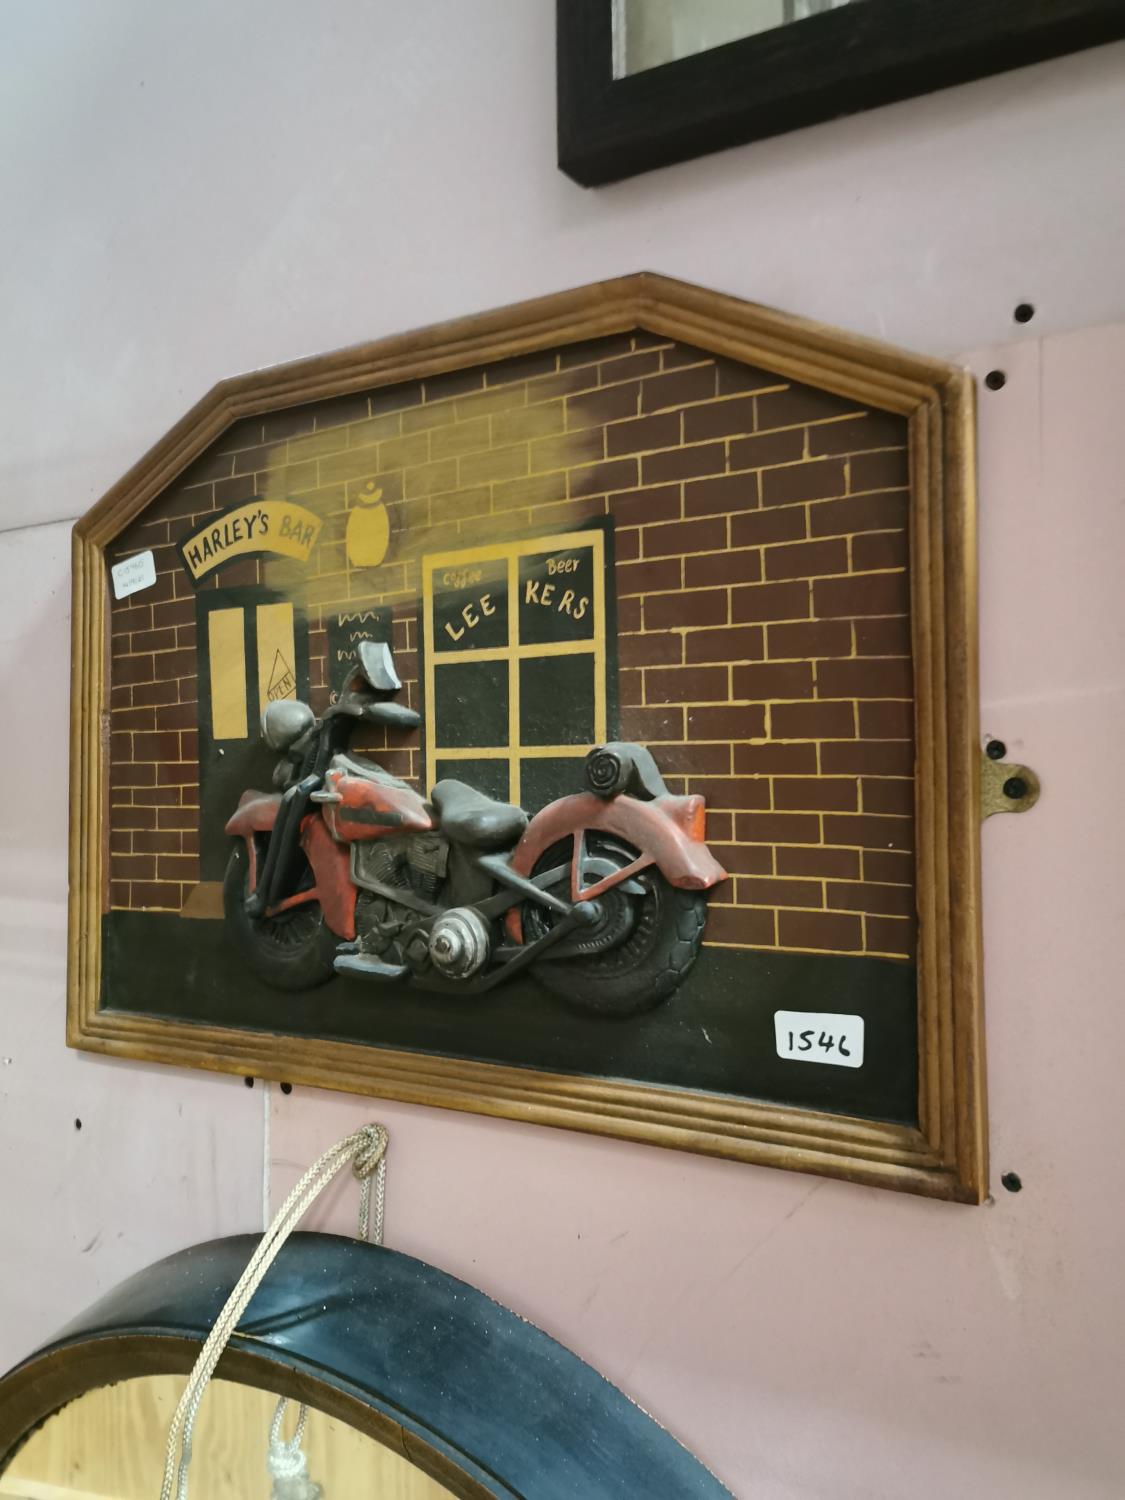 Harley Davidson Motorcycles advert on board.